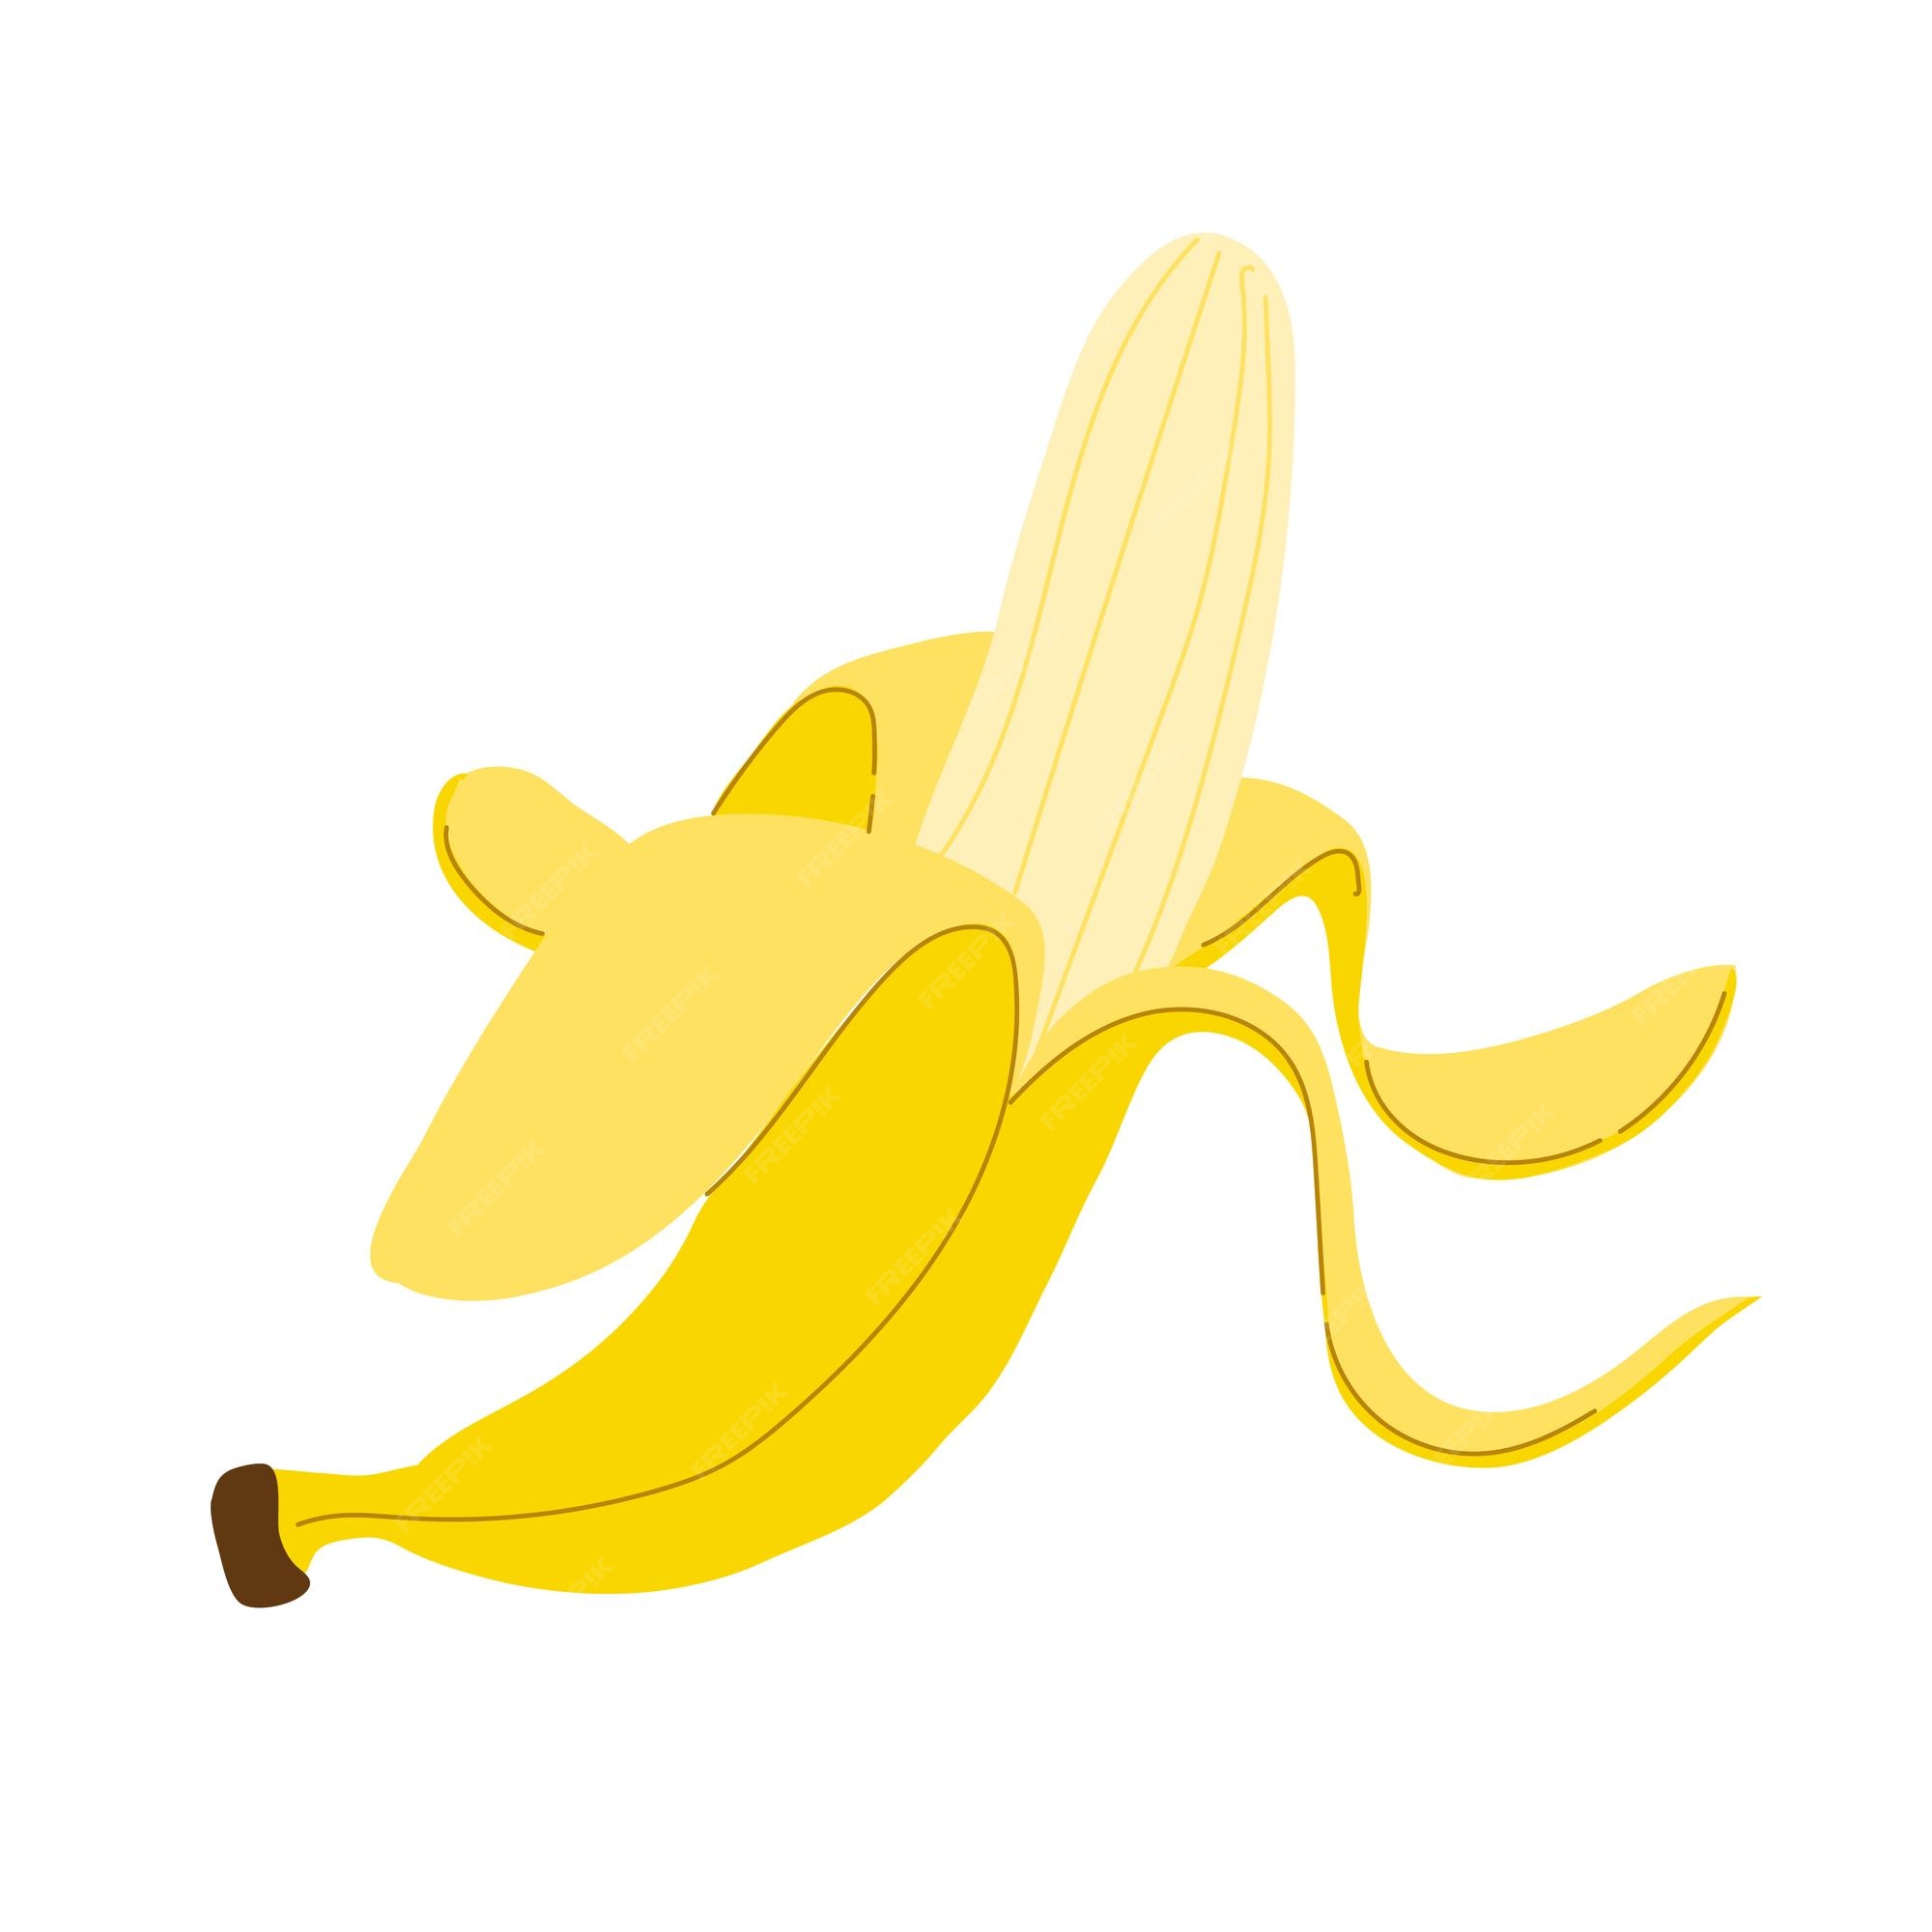 Banana Peel Clipart Transparent Background, Cartoon Hand Drawn - Clip ...